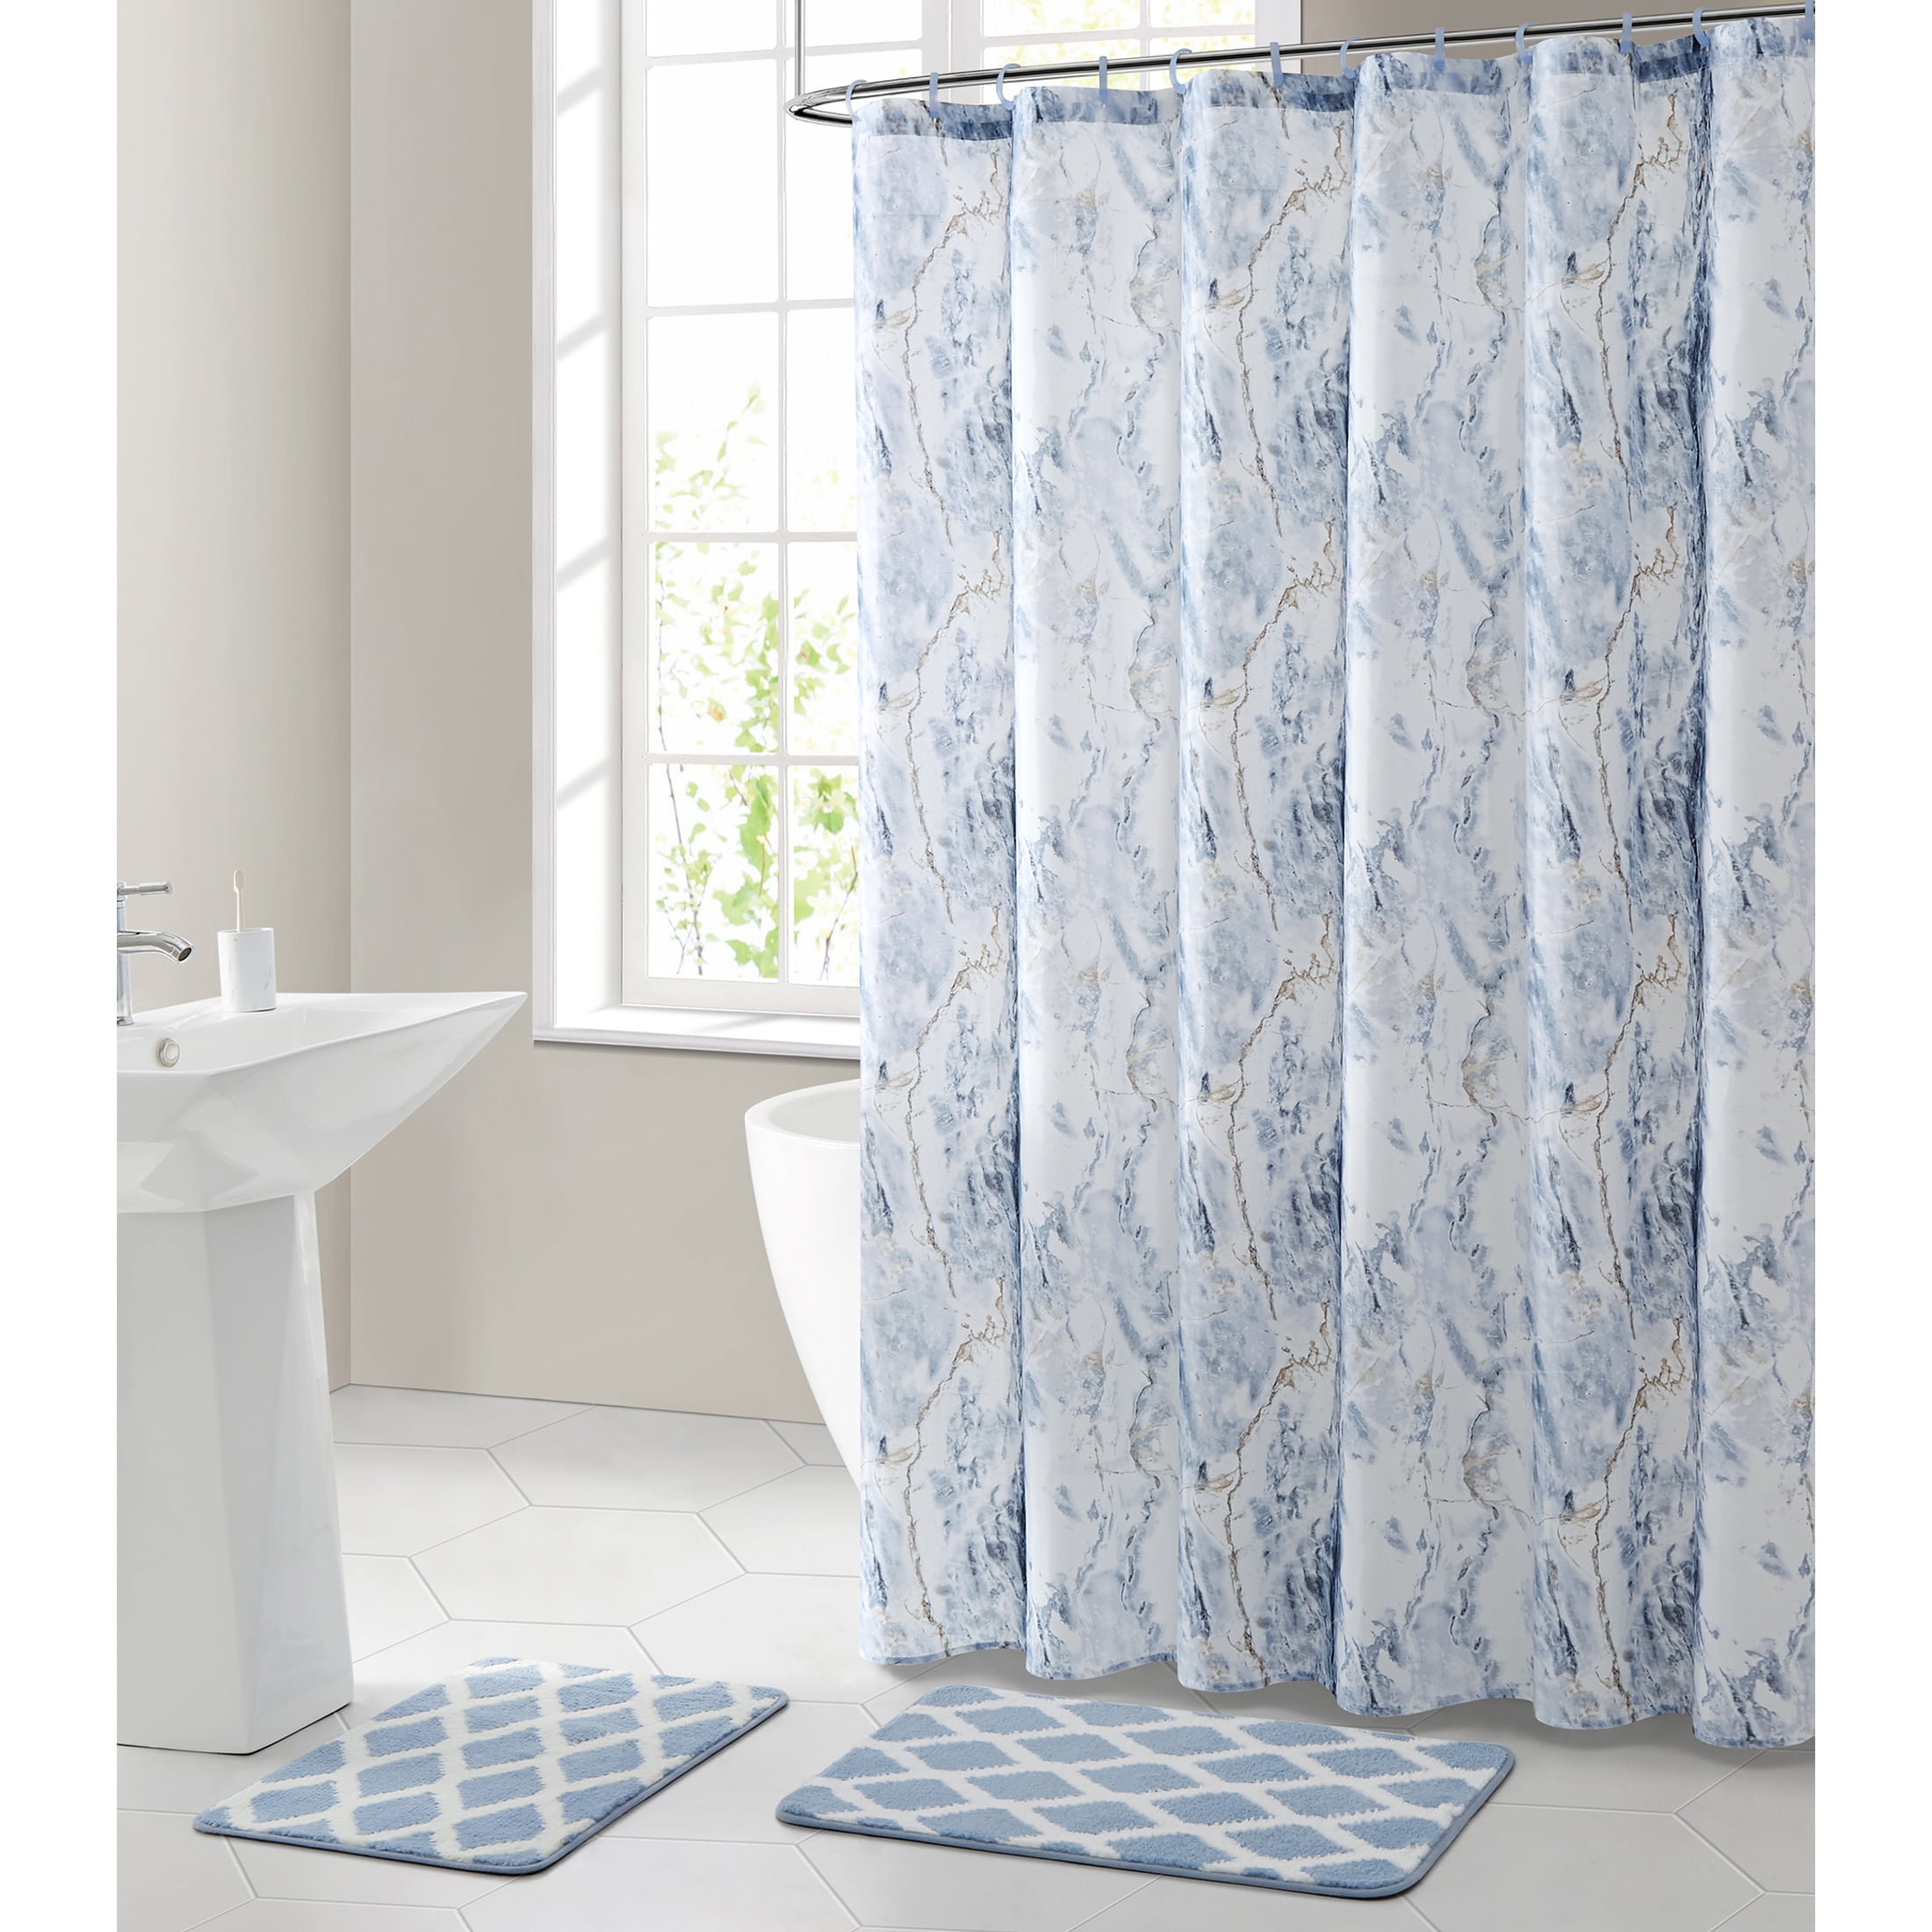 Super Smash Bros Waterproof Shower Curtain Bathroom Wall Hangings Hooks Home 